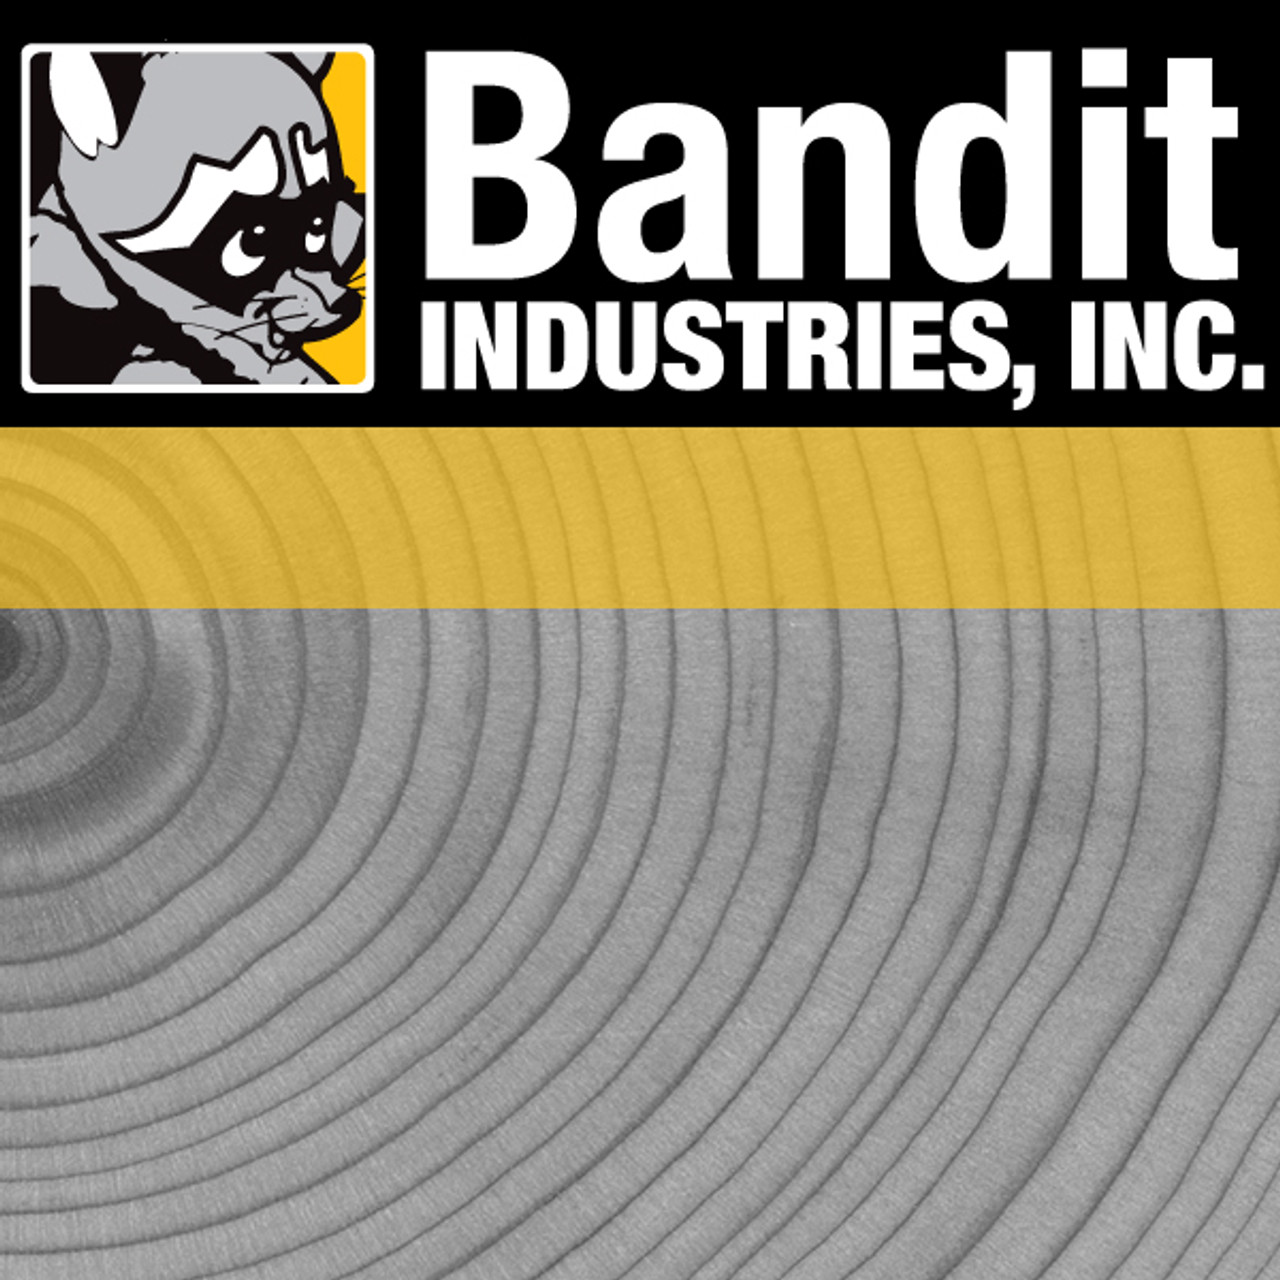 986-1110-65: BANDIT FRONT CHIPPER BASE, PTO-TRAILERIZED